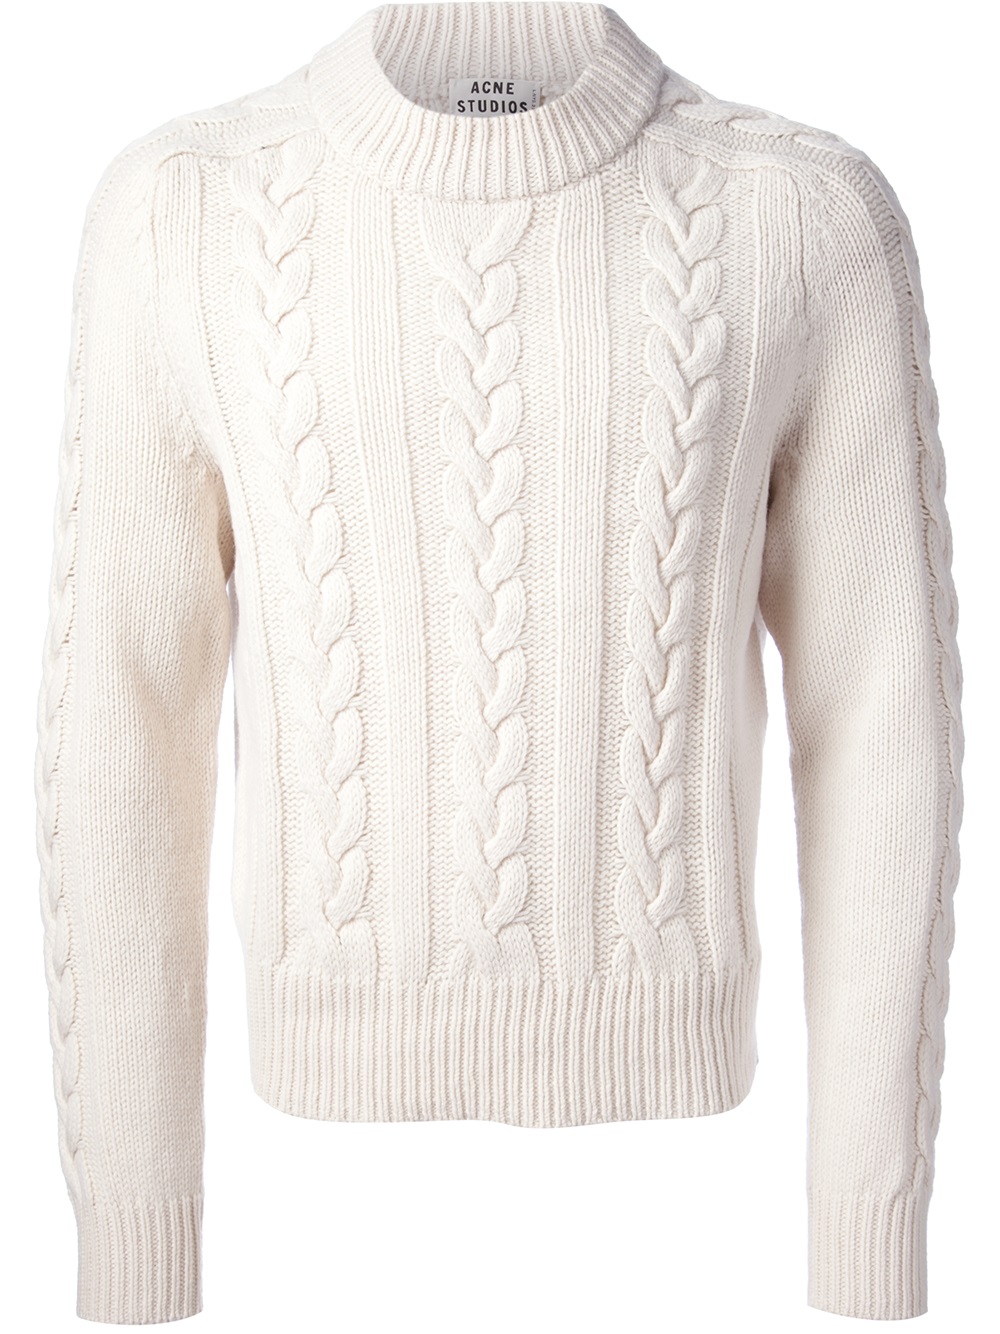 Aliexpress.com : Buy Giordano Men Sweater Men Pullovers